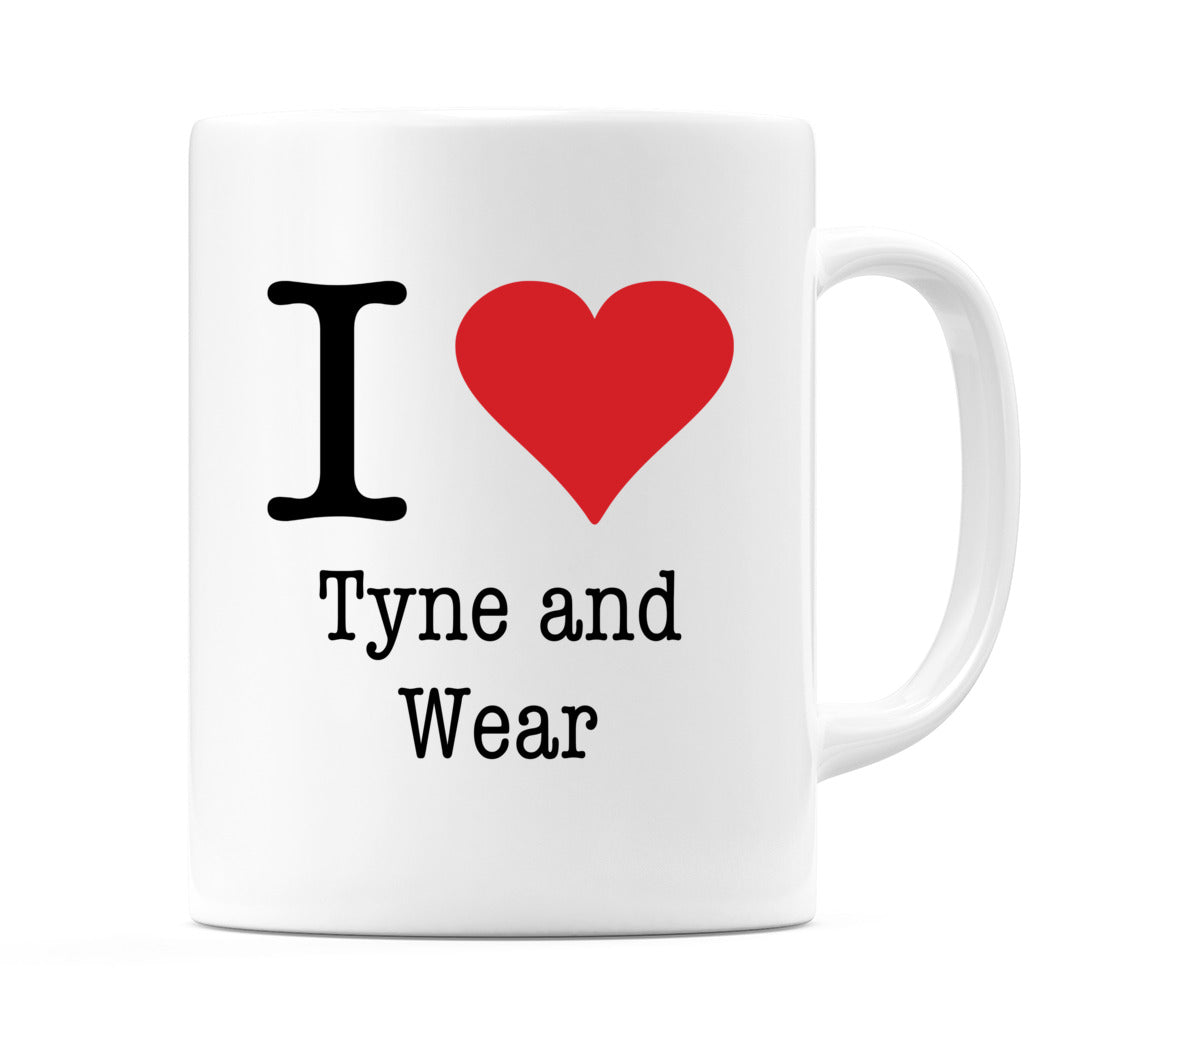 I Love Tyne and Wear Mug